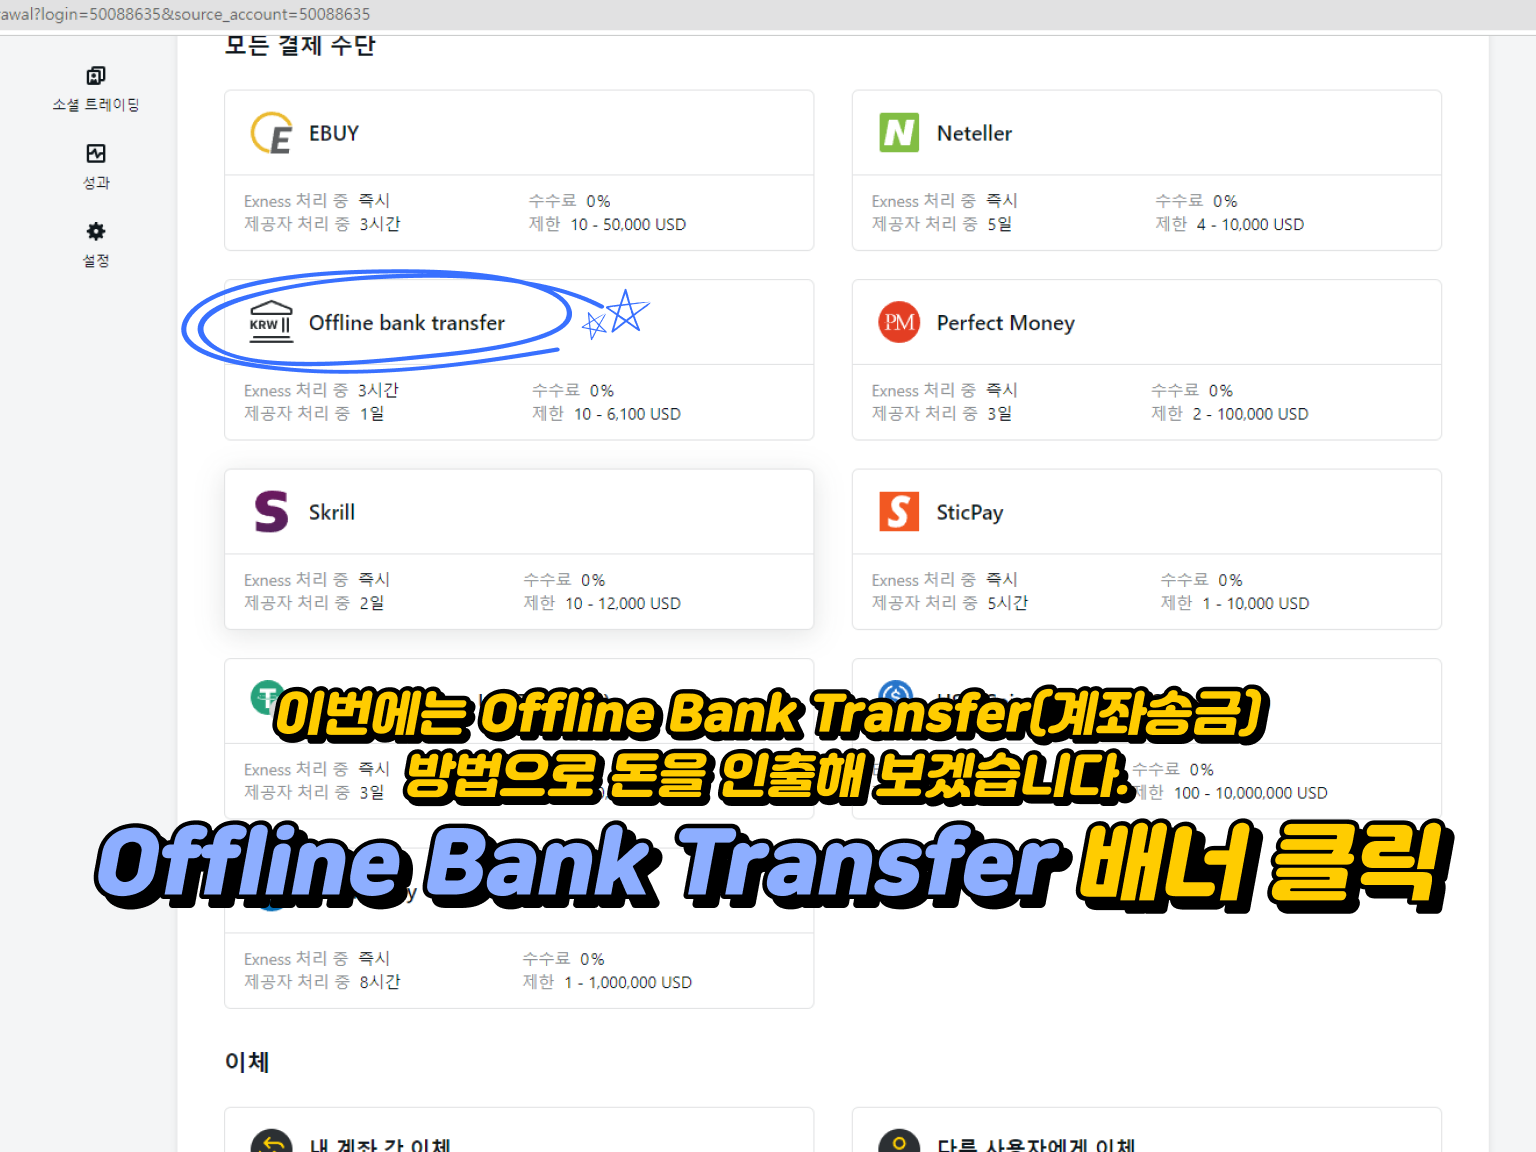 exness 출금방법 10 - 이번에는 Offline Bank Transfer(계좌송금) 방법으로 돈을 인출해 보겠습니다.  Offline Bank Transfer 배너 클릭